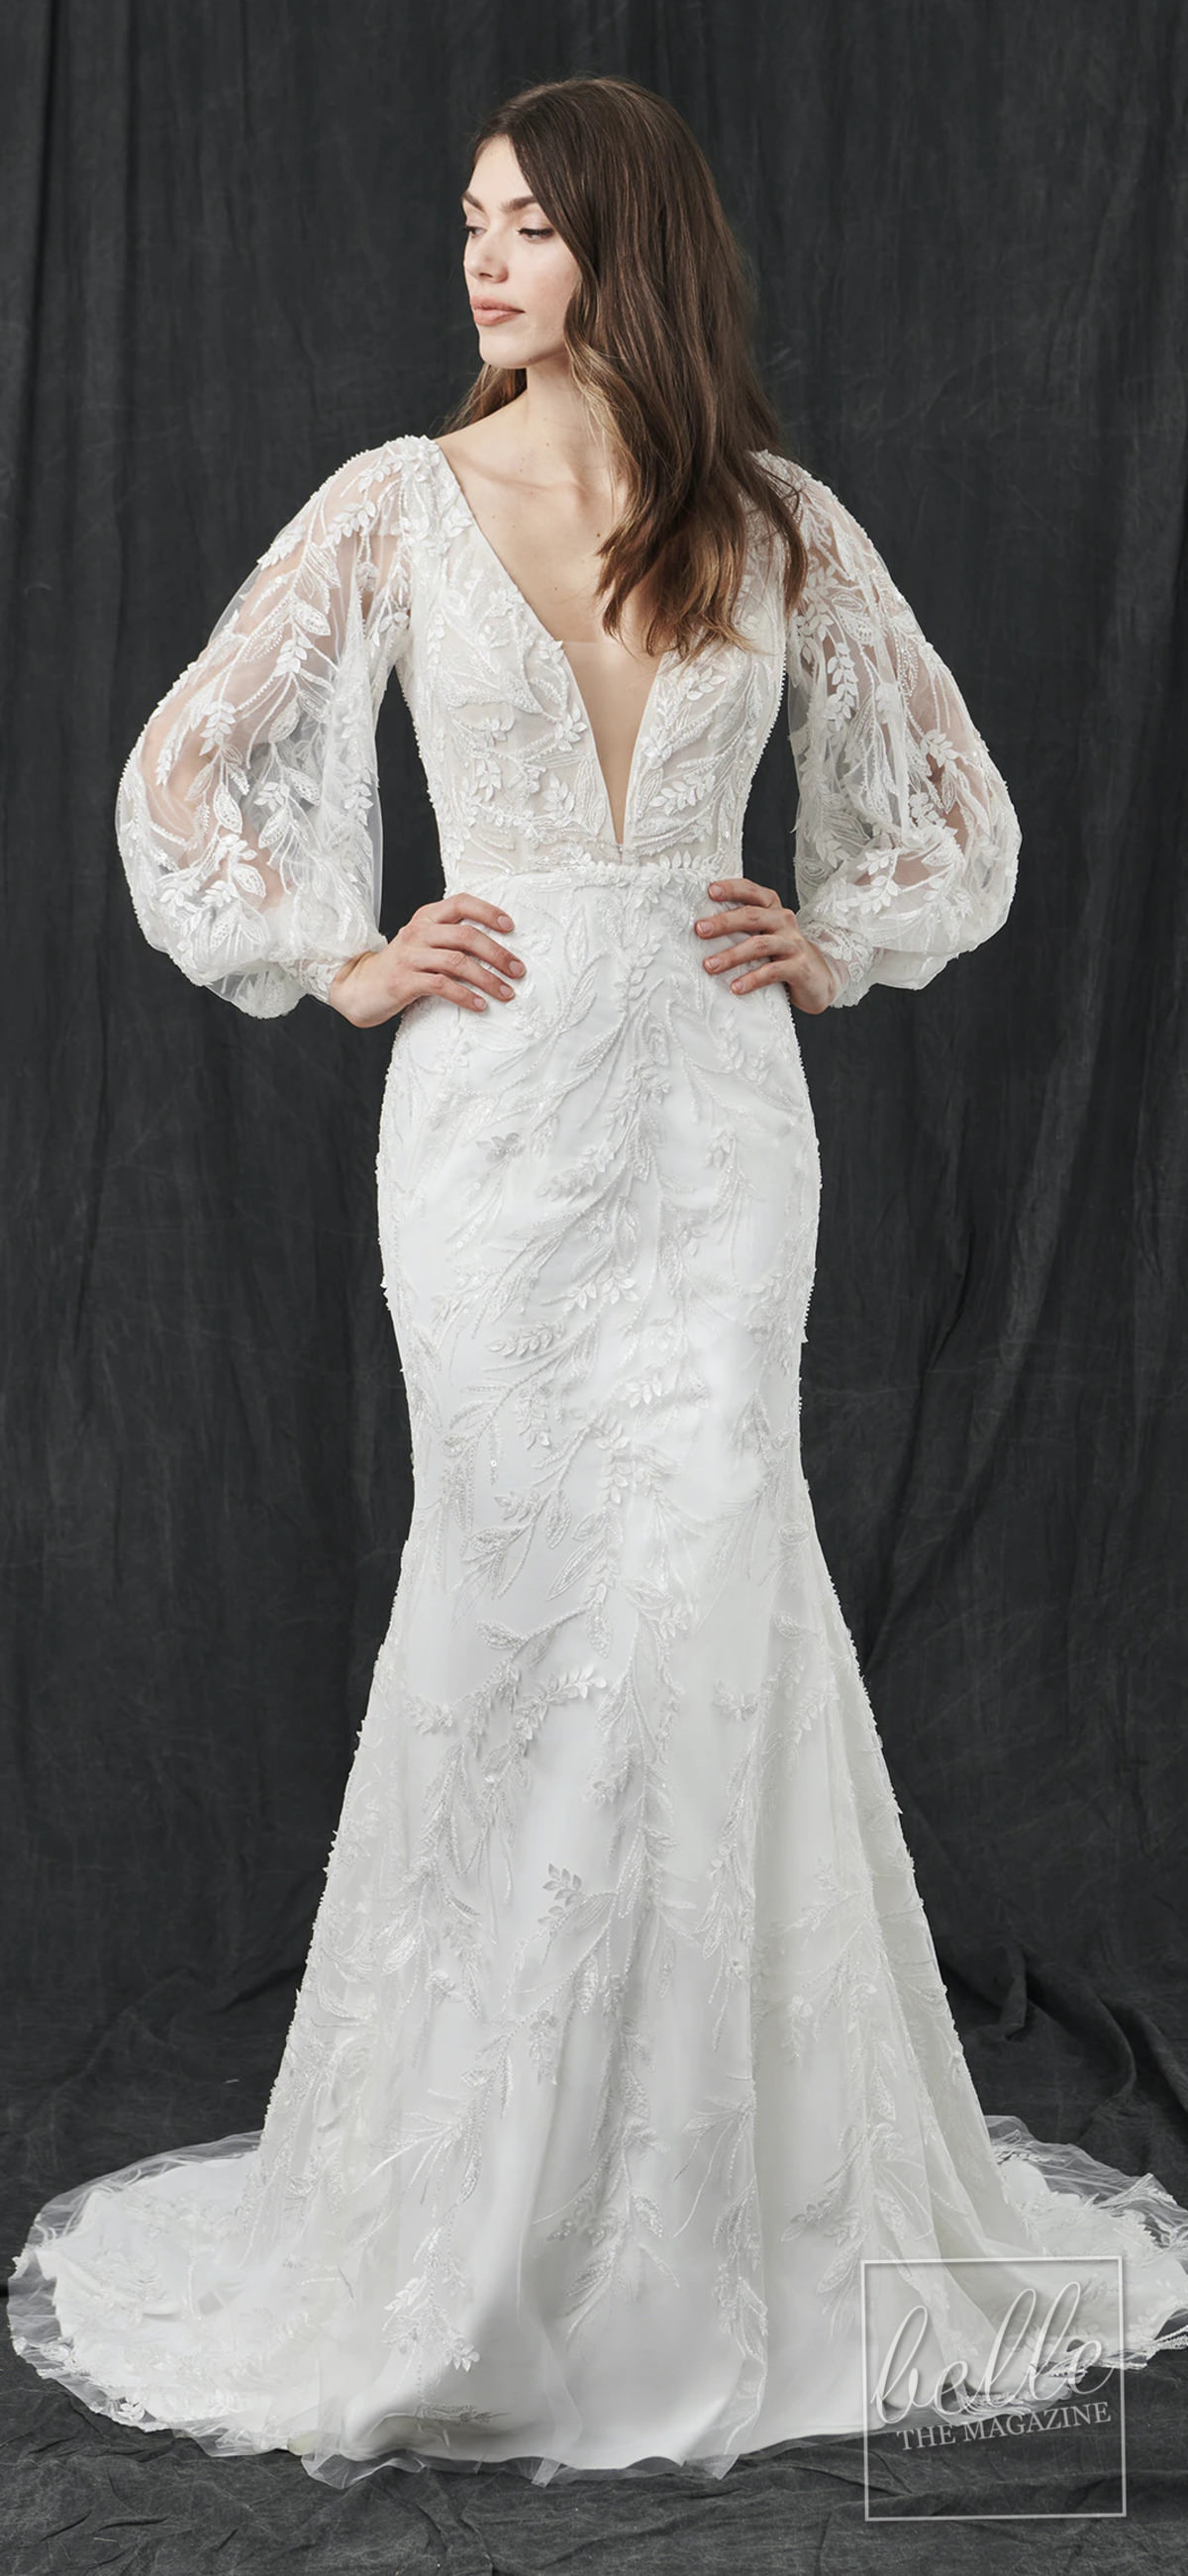 Wedding dress trends 2021 - Puff Sleeves - KELLY FAETANINI Redux Ren